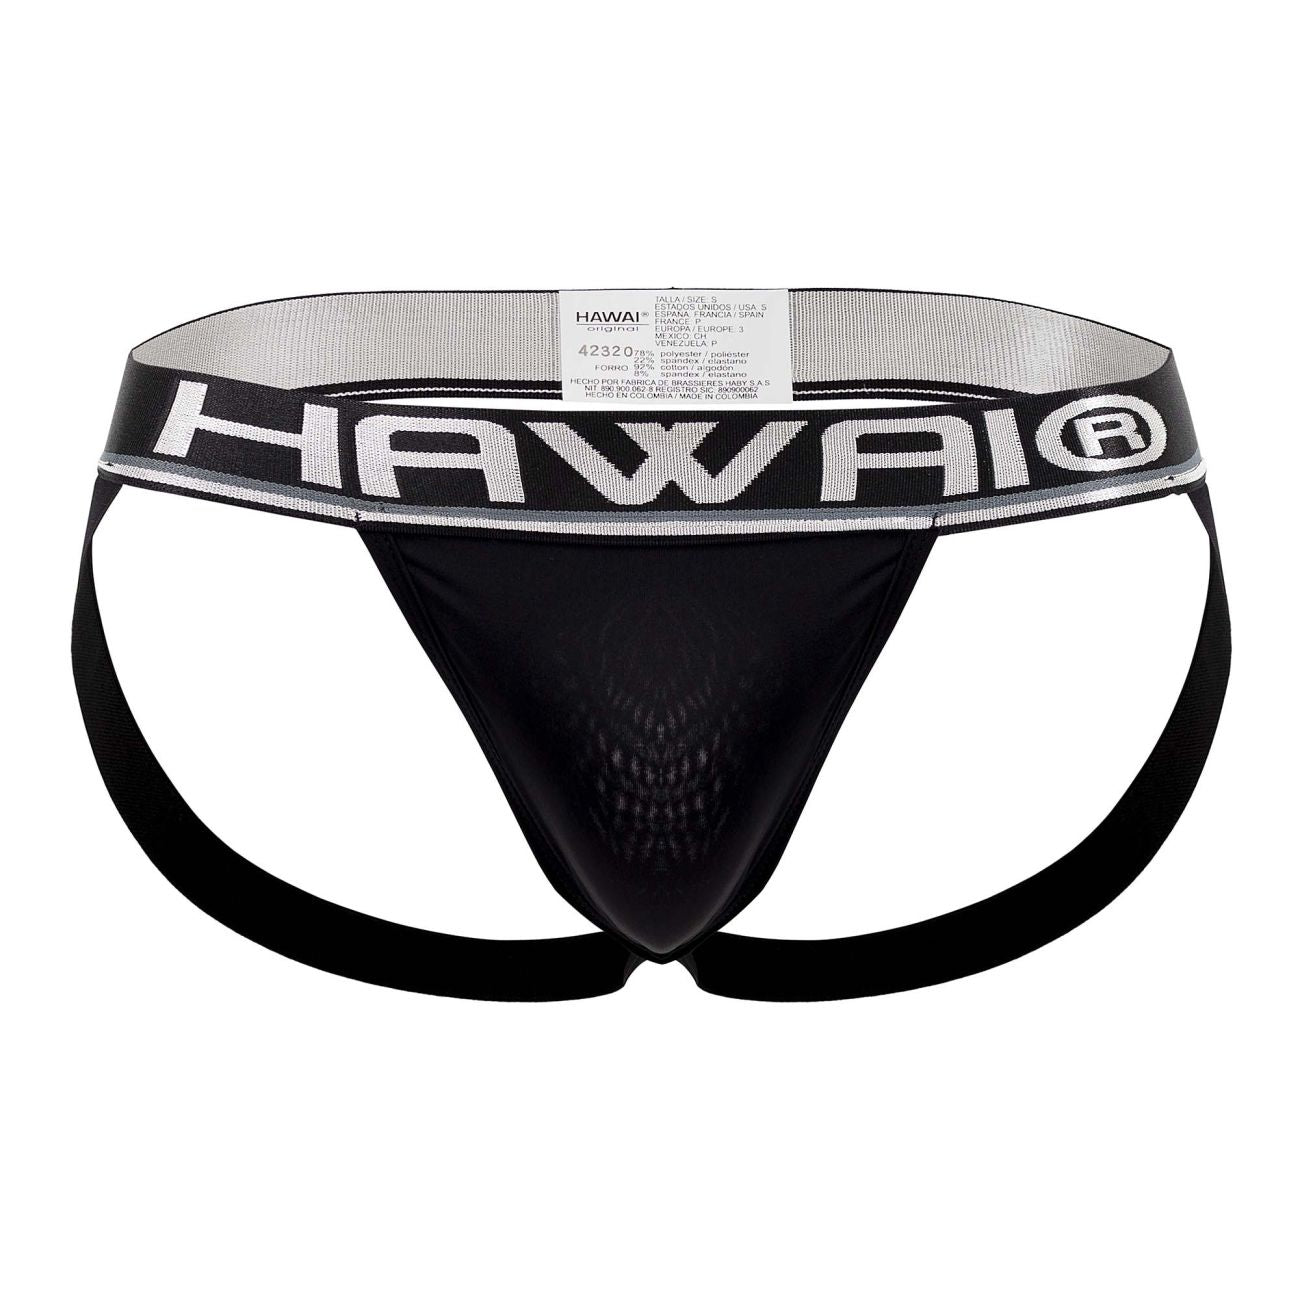 HAWAI 42337 Microfiber Jockstrap Black